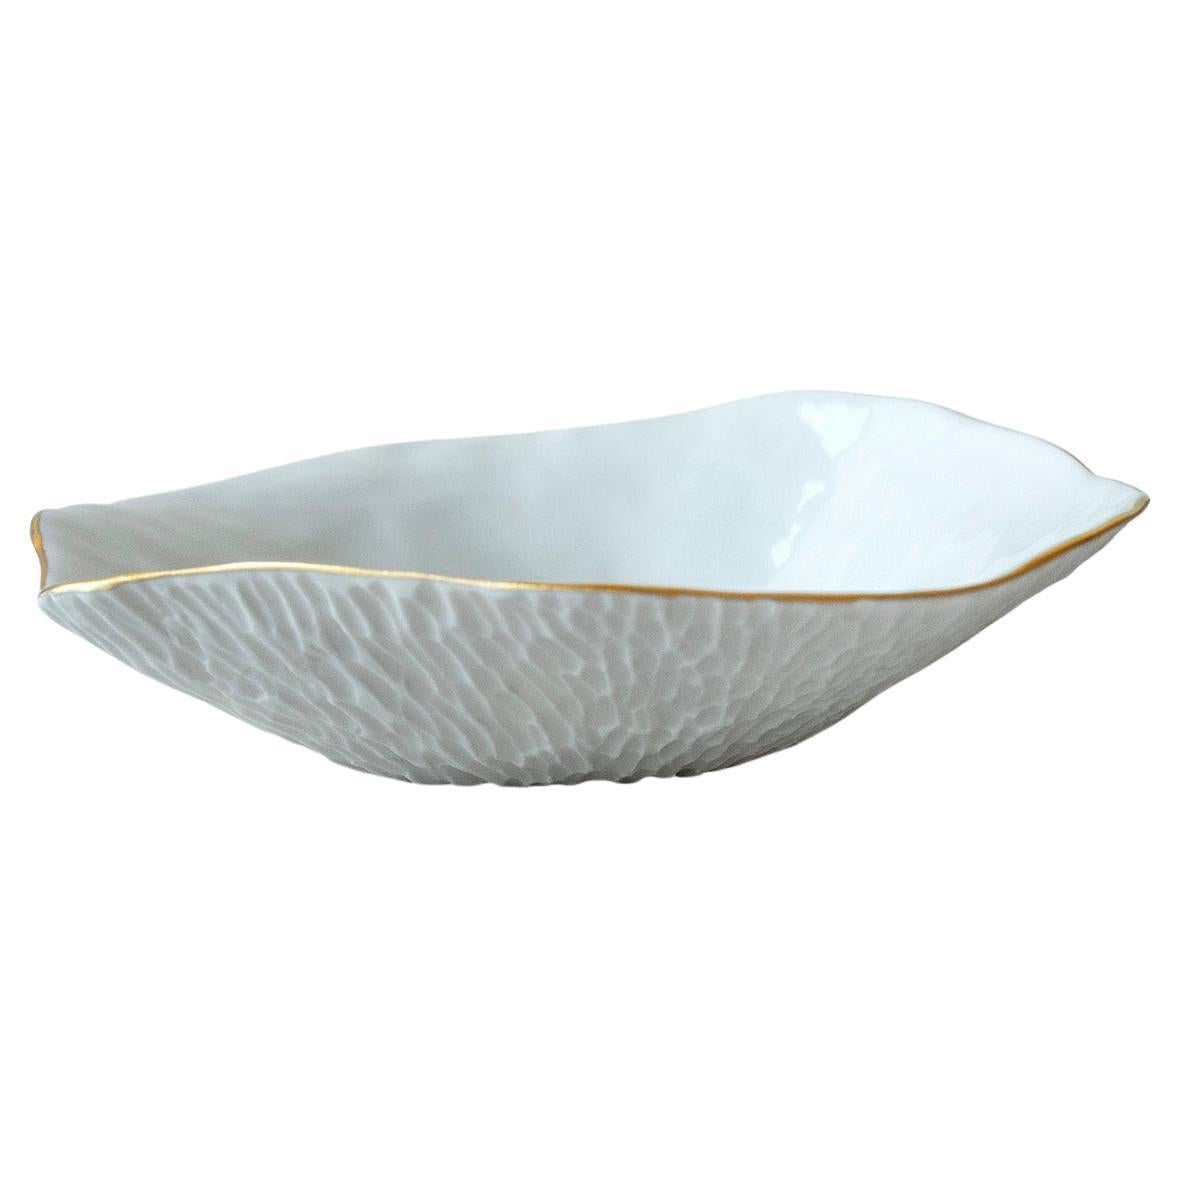 Indulge Nº9 / Golden Rim / Small Plate, Handmade Porcelain Tableware For Sale